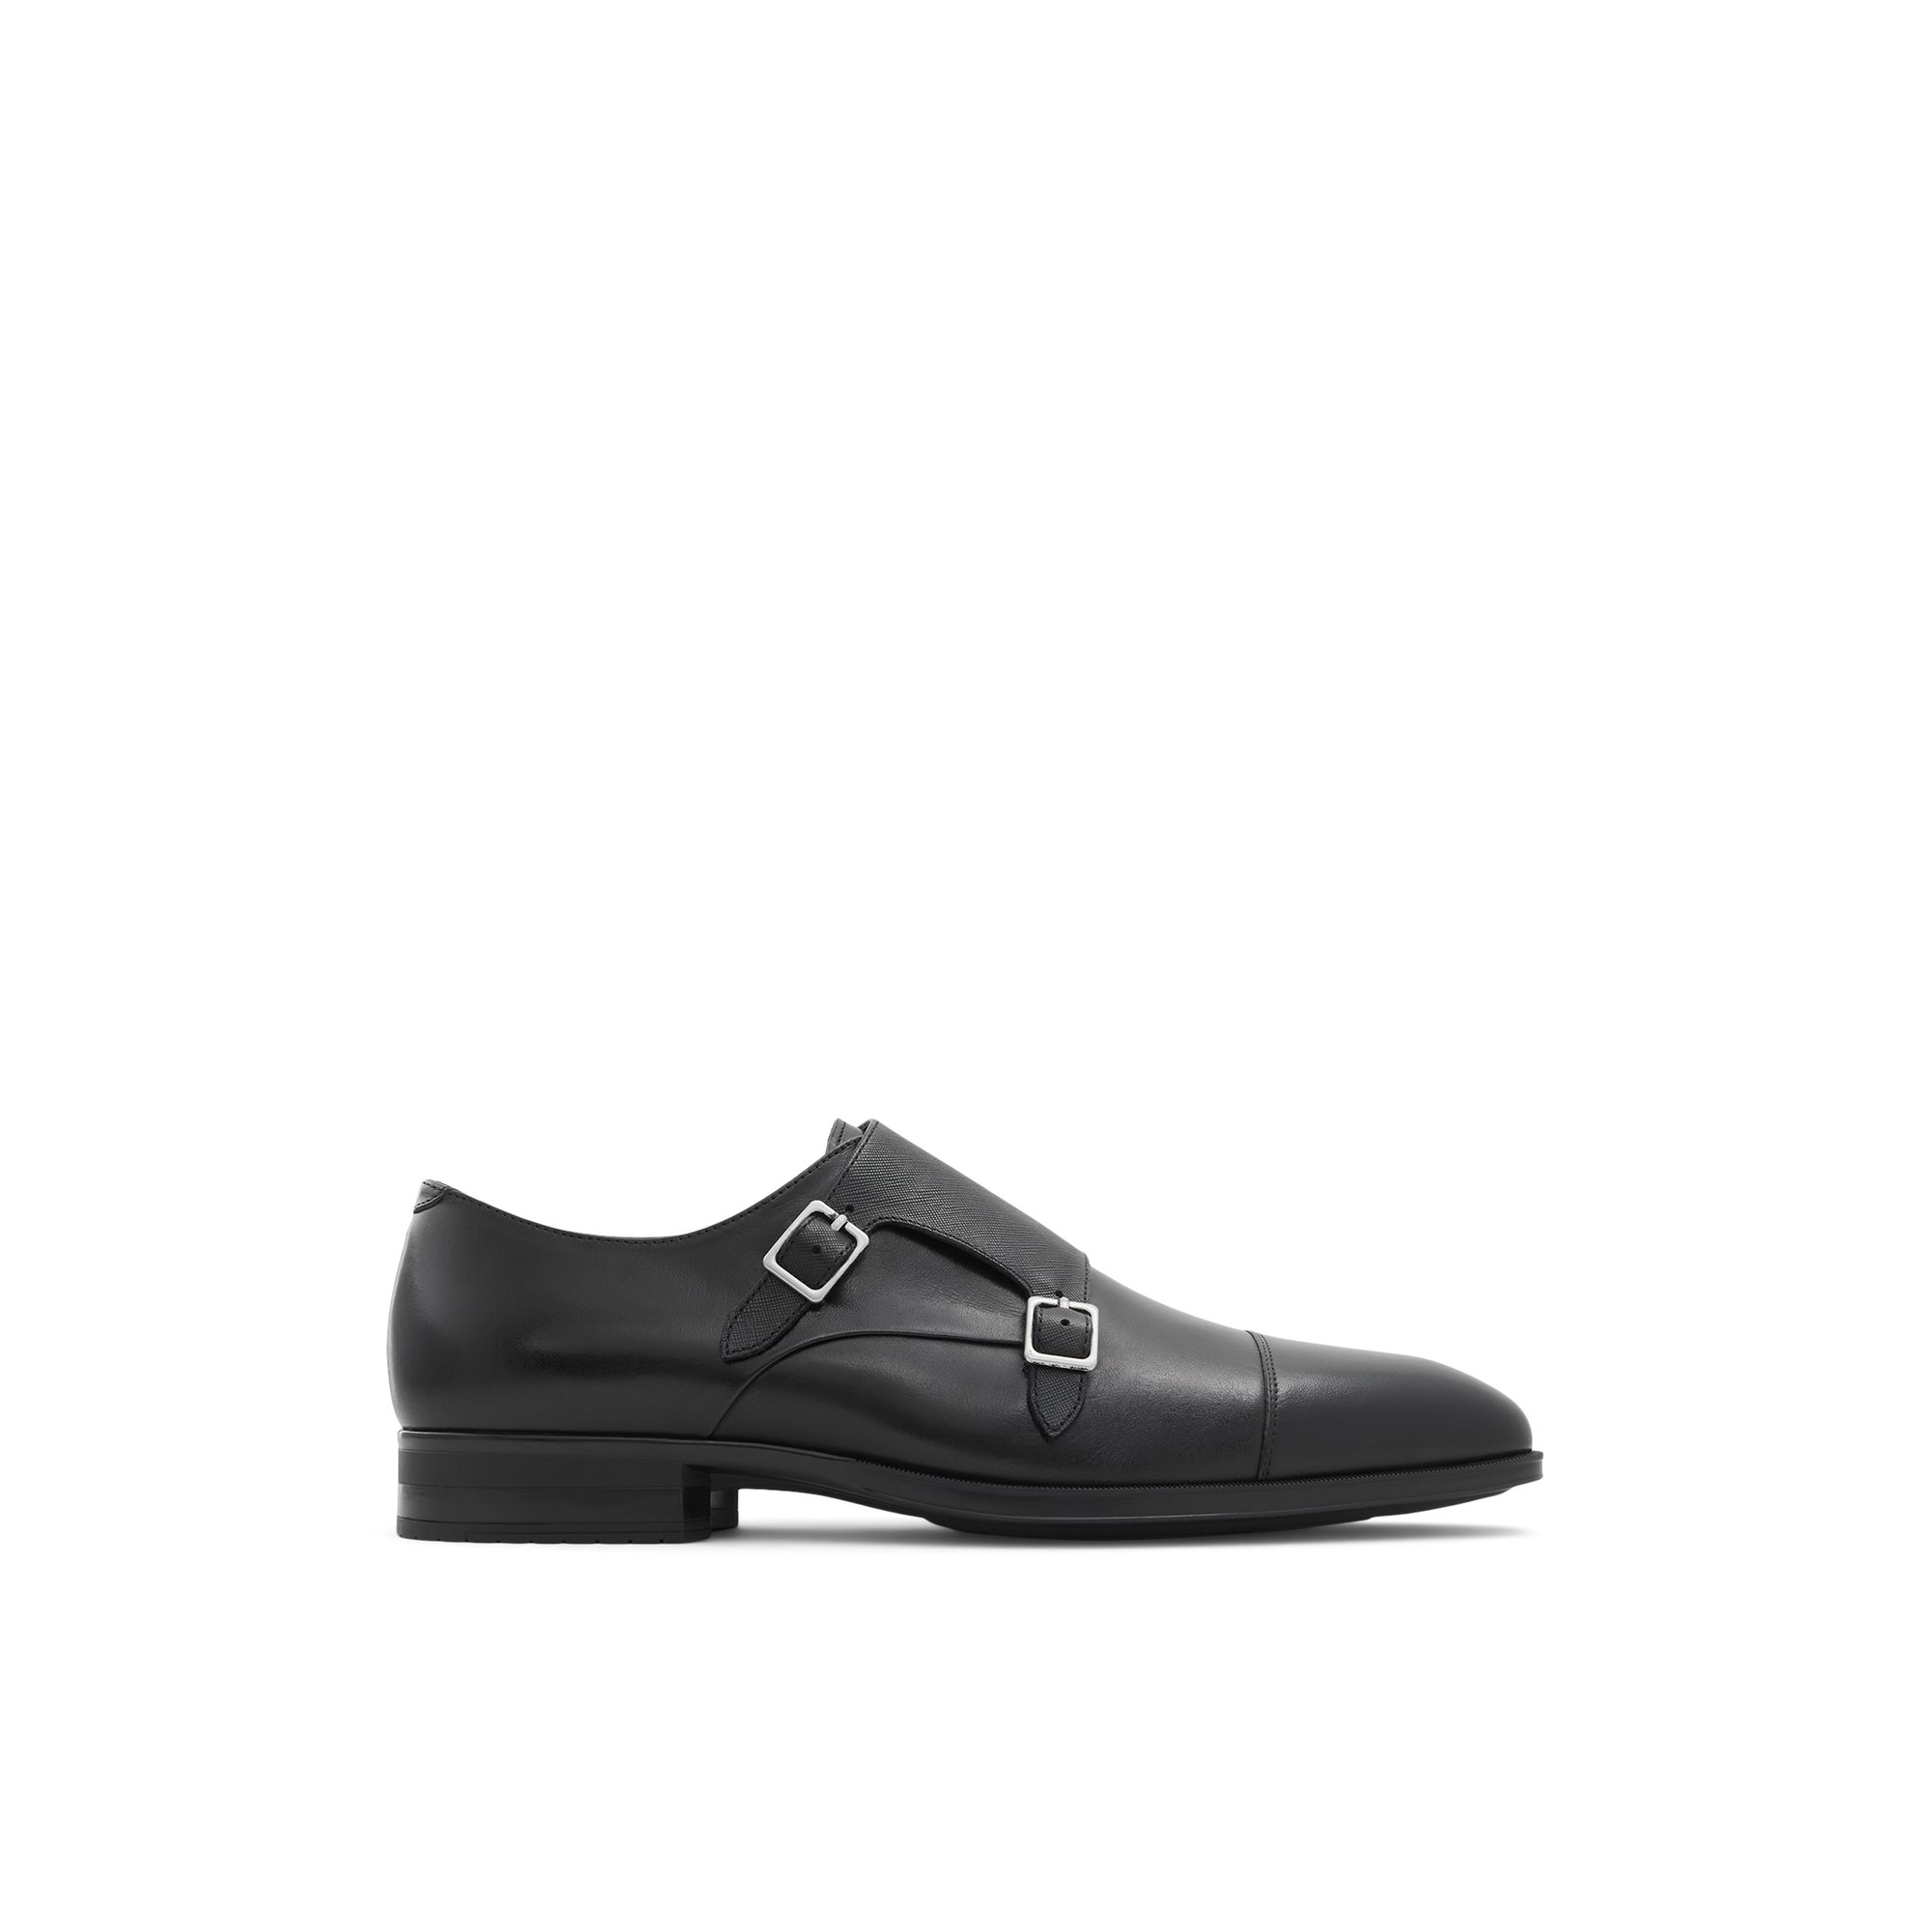 ALDO Tremanor - Men's Loafers and Slip on - Black